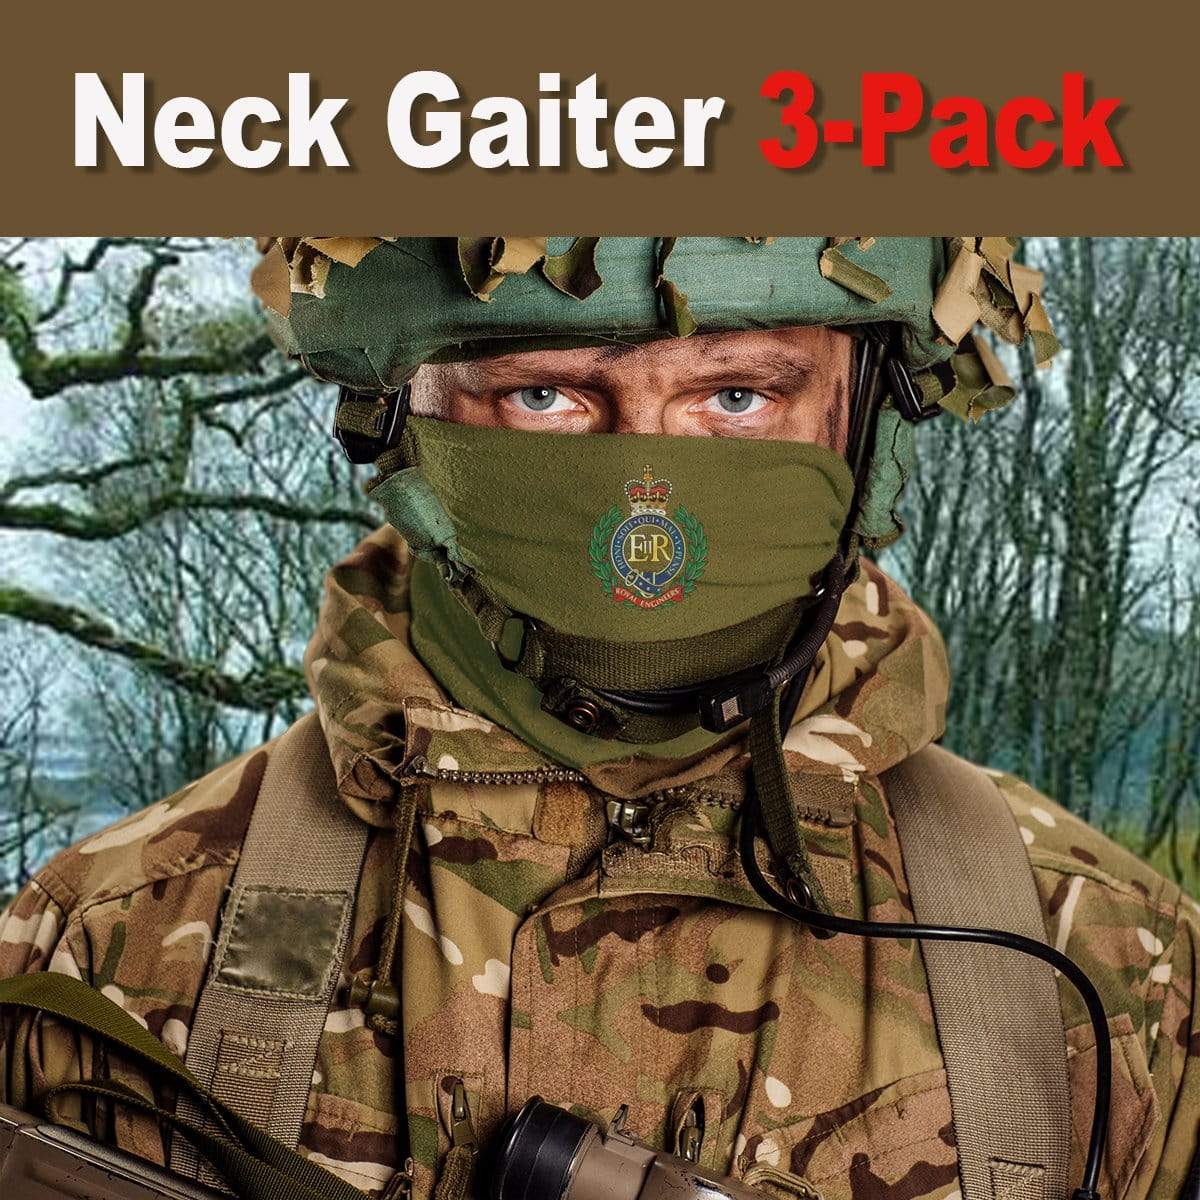 neck gaiter Bandana 3-Pack - Royal Engineers Neck Gaiter 3-Pack Royal Engineers Neck Gaiter/Headover 3-Pack